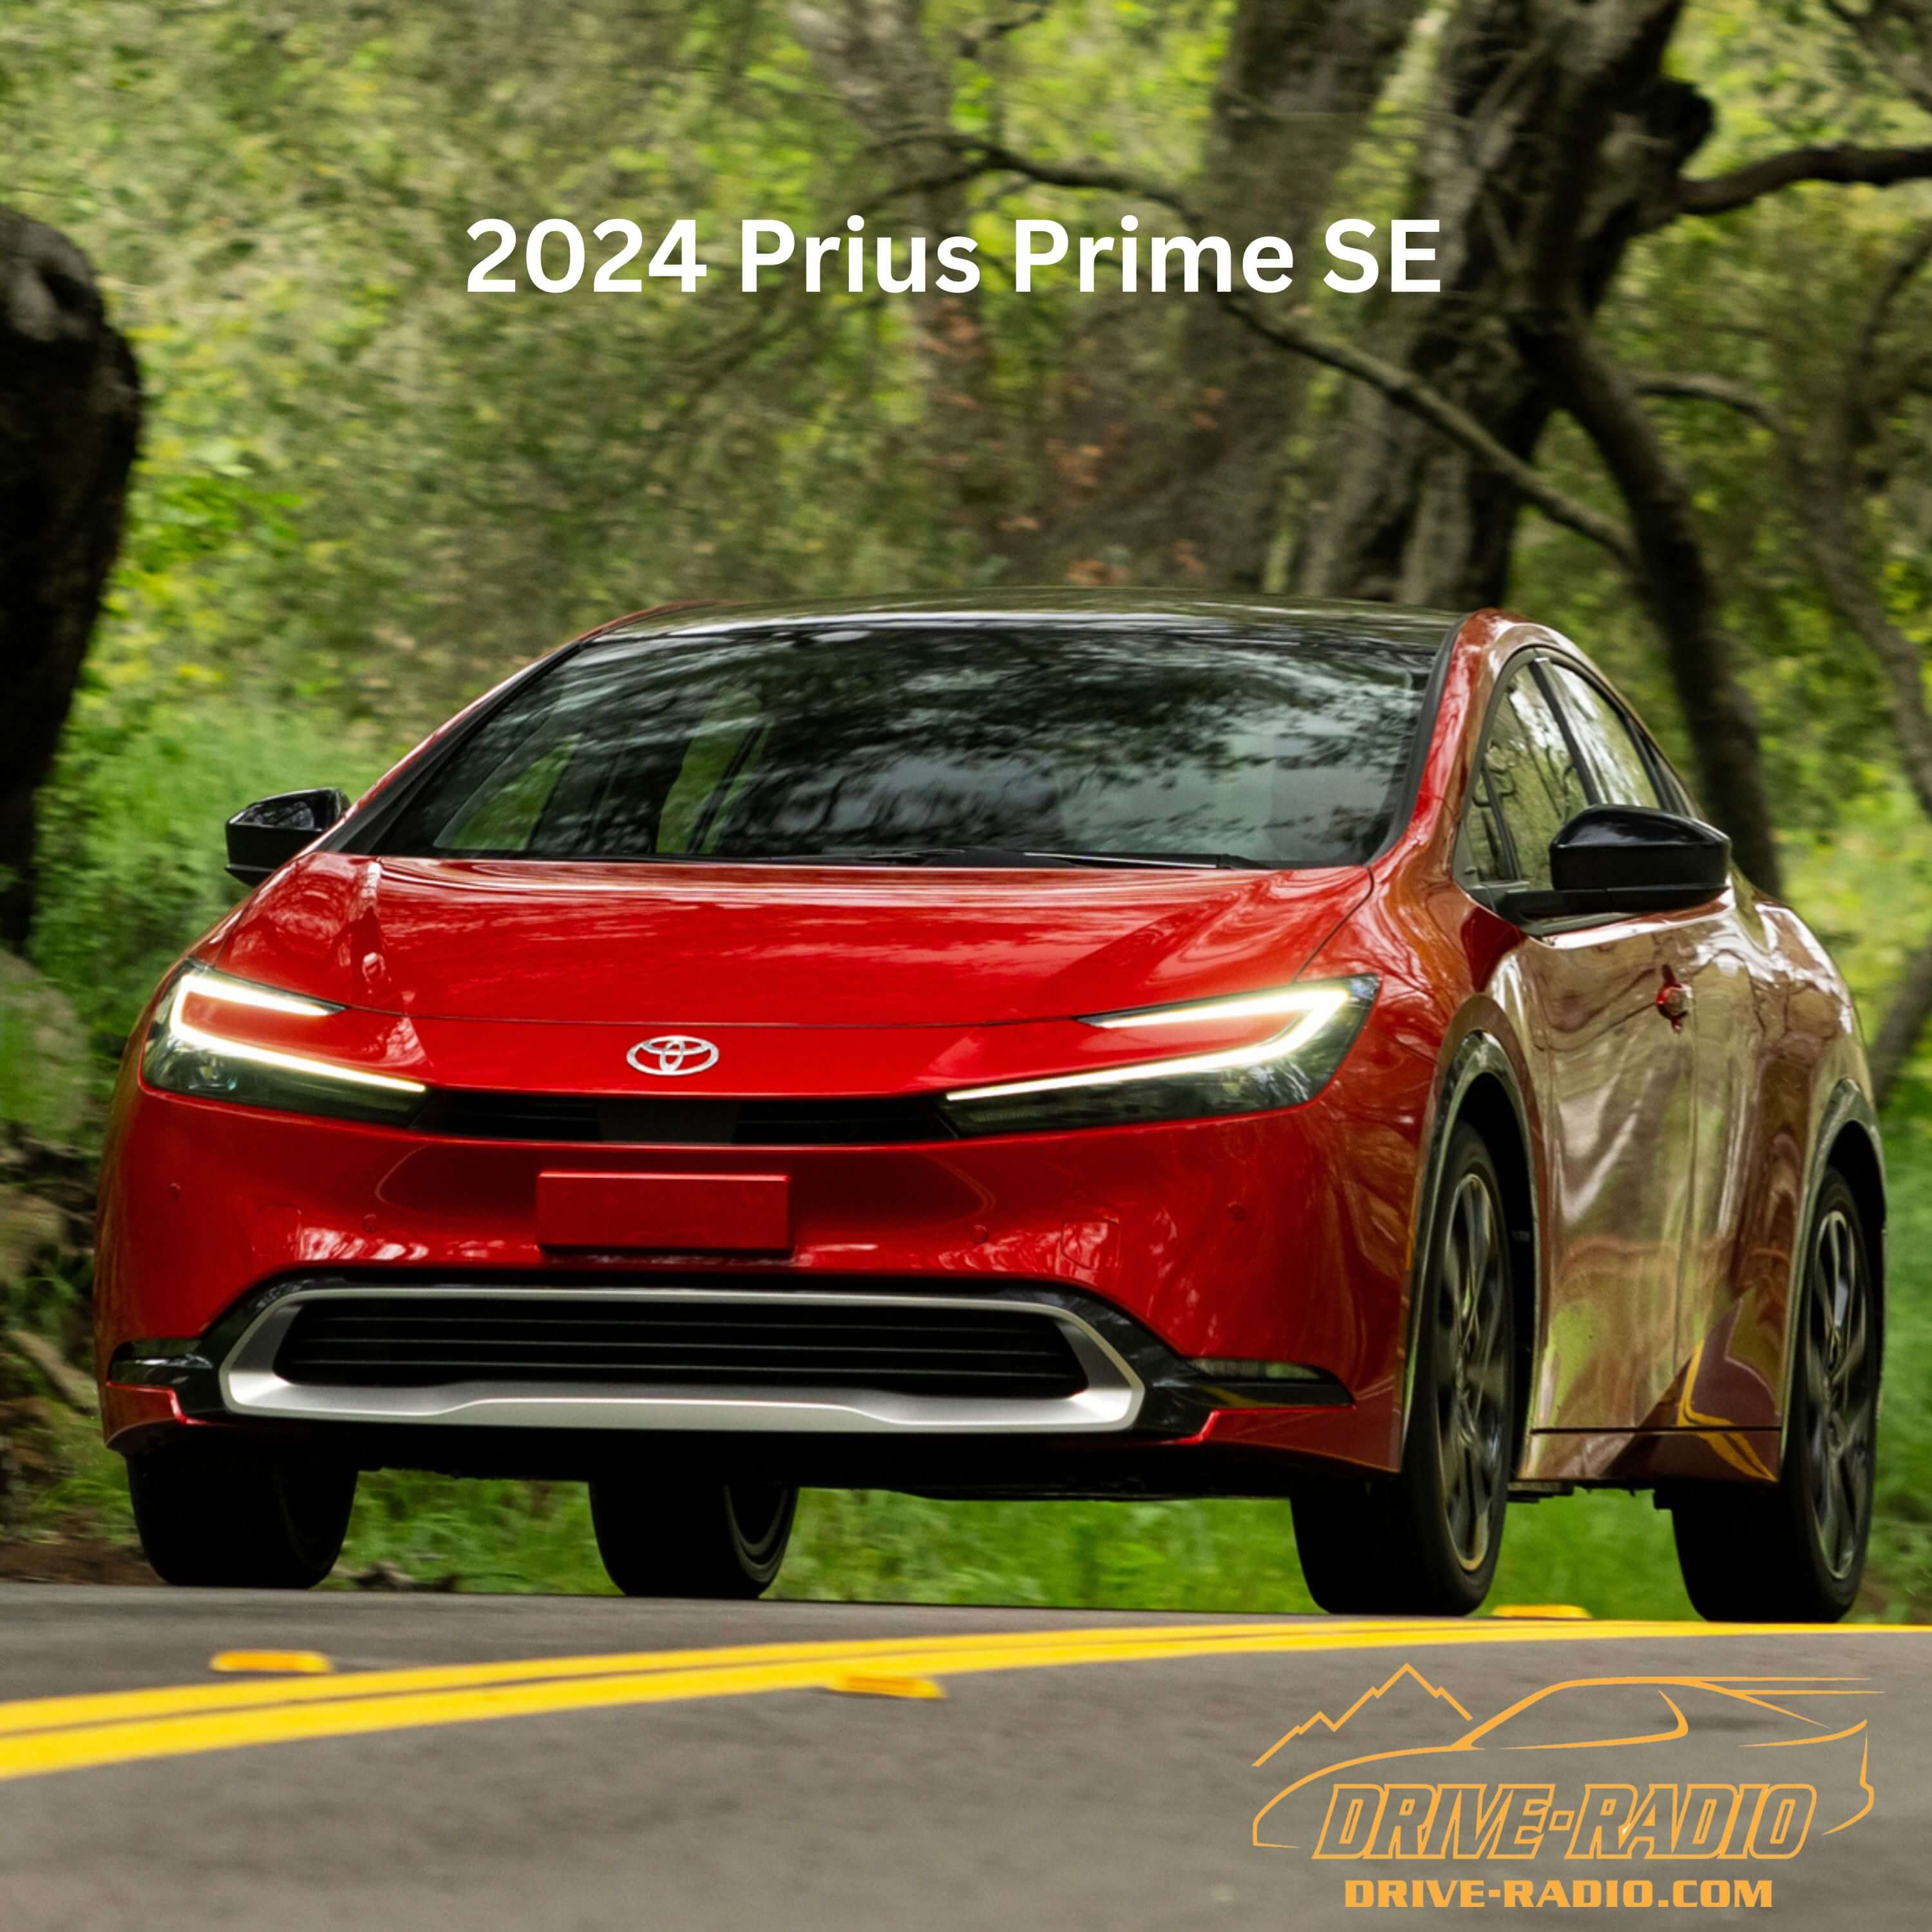 2024 Prius Prime SE